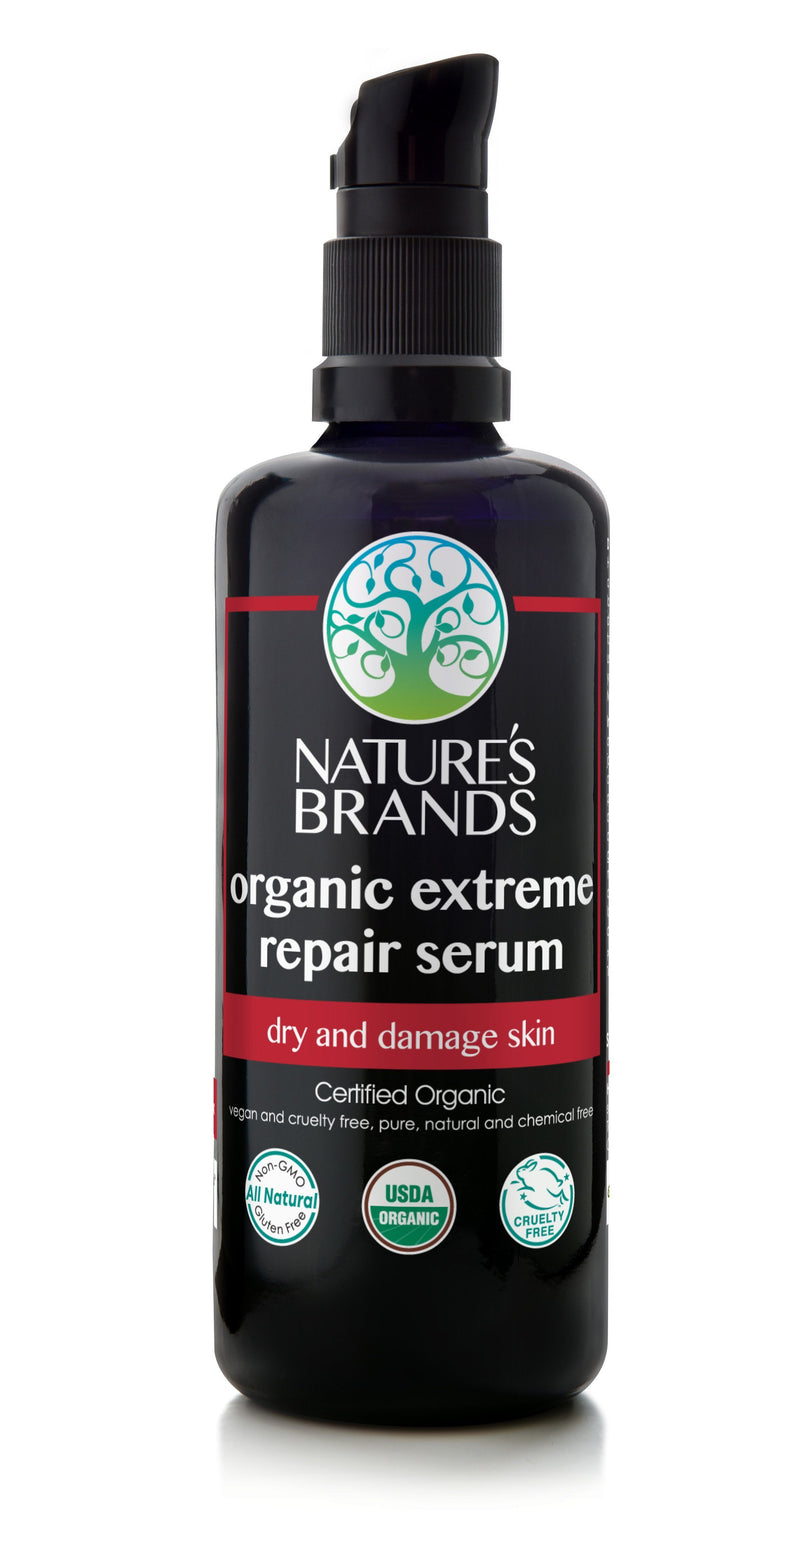 Herbal Choice Mari Organic Extreme Repair Serum - Herbal Choice Mari Organic Extreme Repair Serum - Herbal Choice Mari Organic Extreme Repair Serum